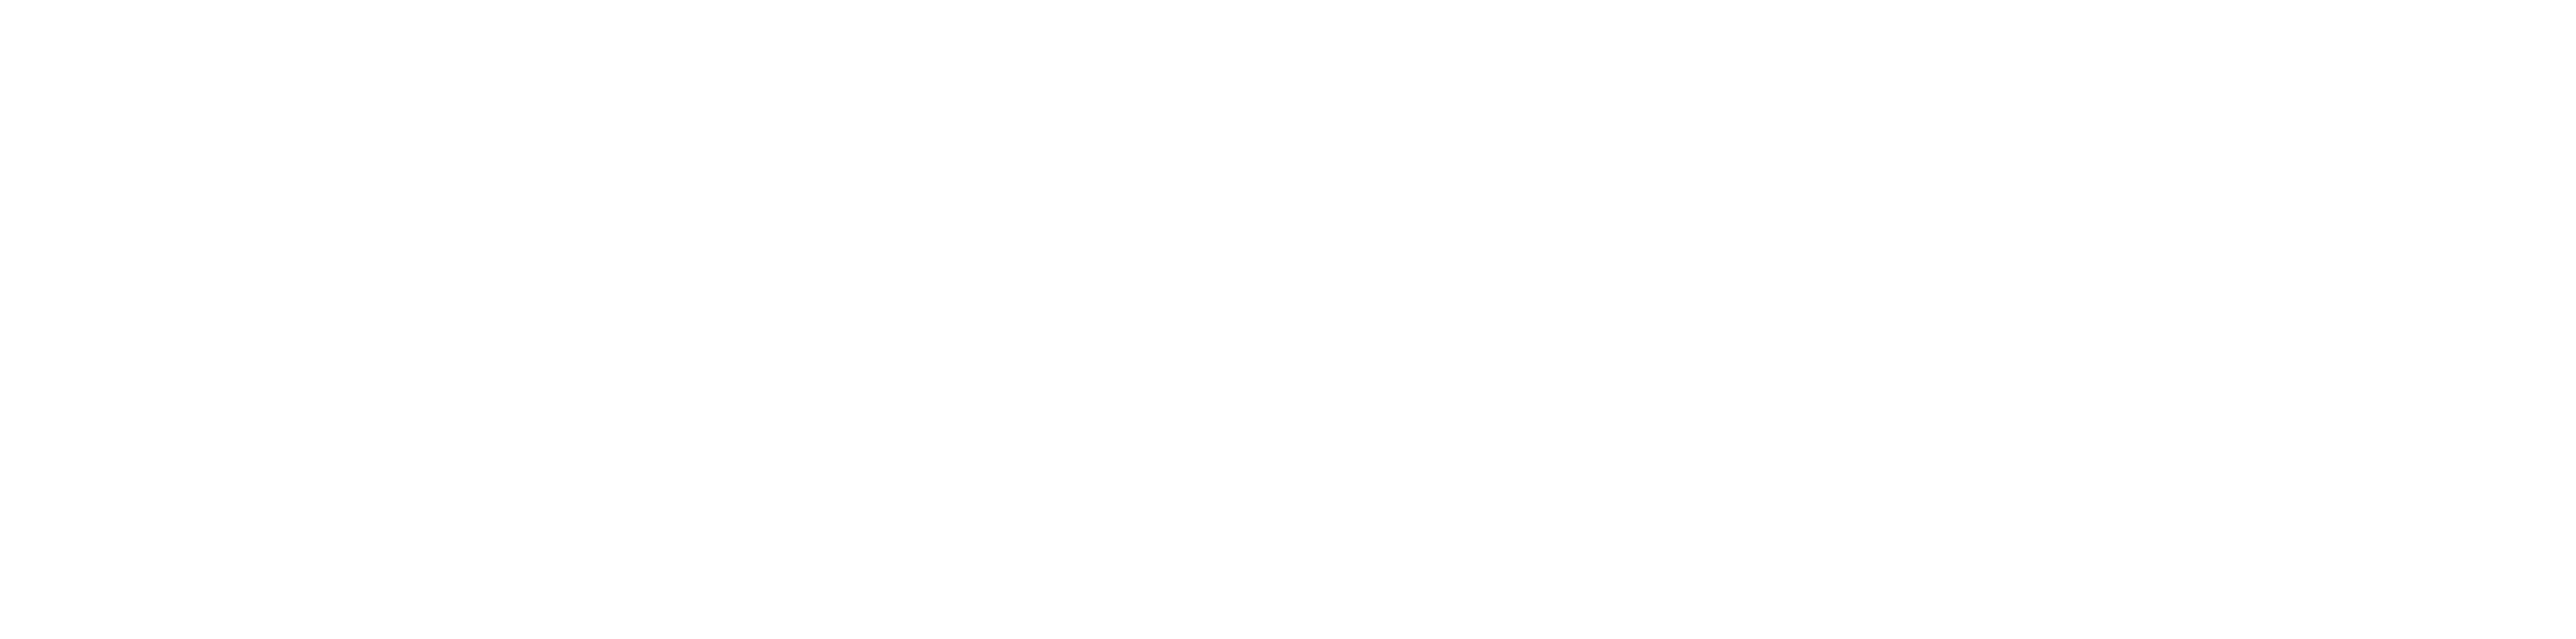 Coinflex full logo white